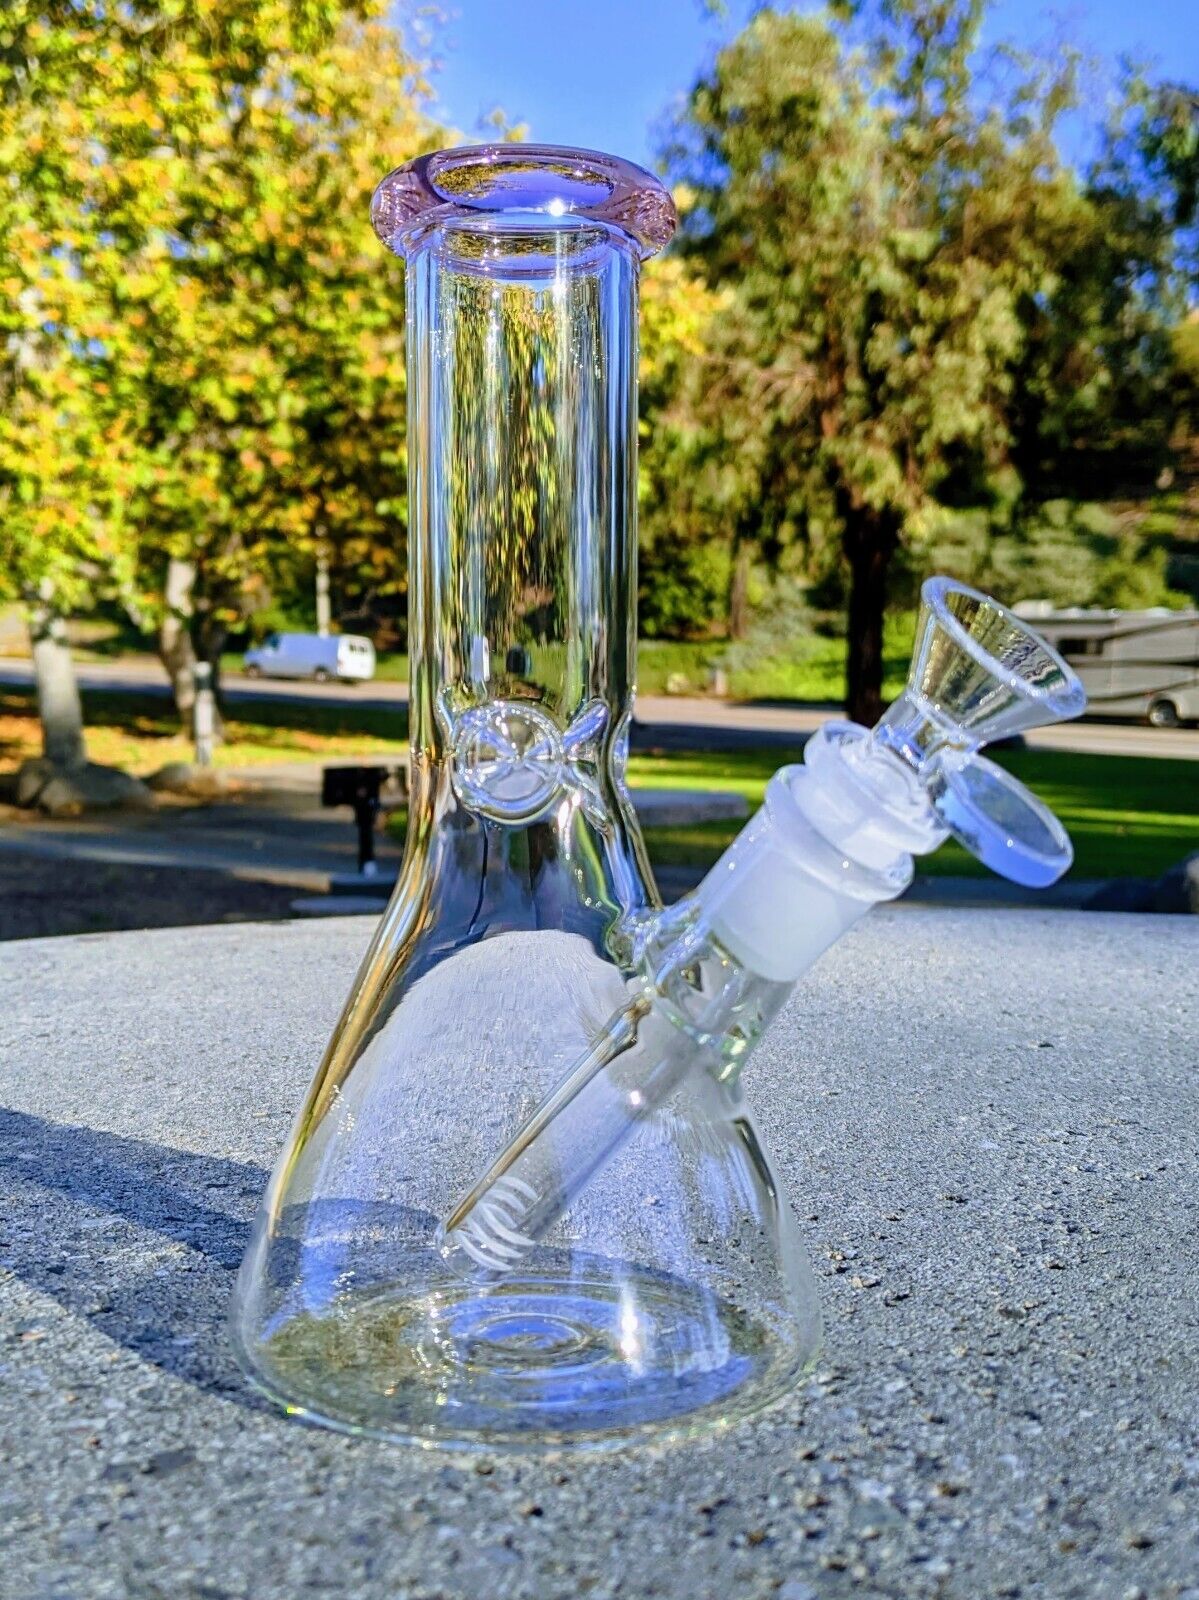 8 Inch Pink Beaker Premium Quality Glass Bong Tobacco Smoking Water Pipe Hookah